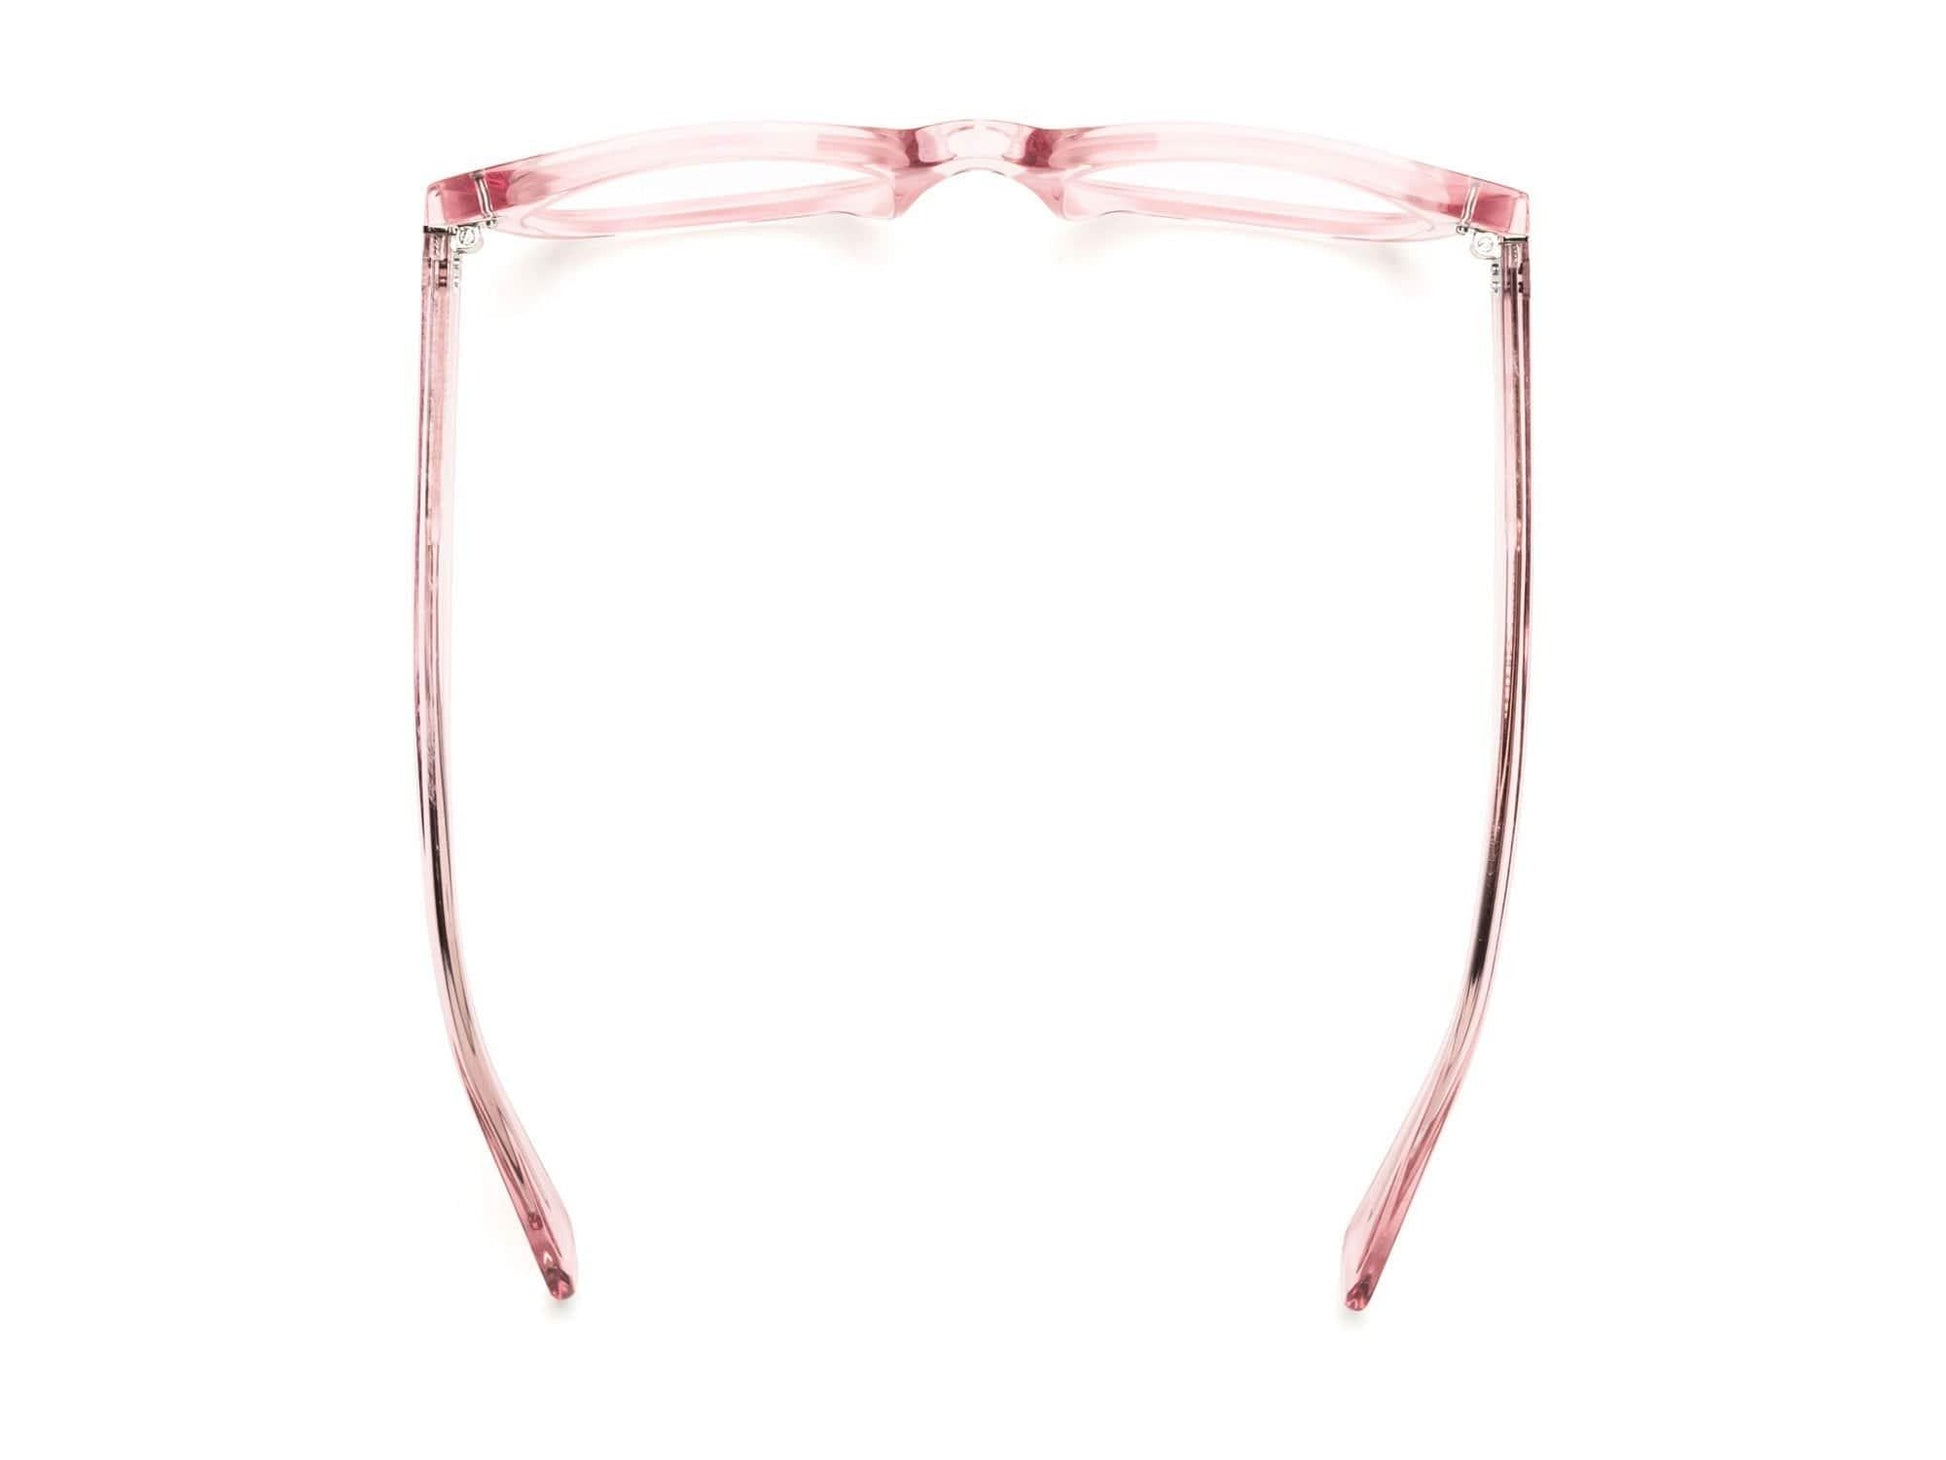 Reading Glasses, Bixby Pink- Chrysler Museum of Art Shop